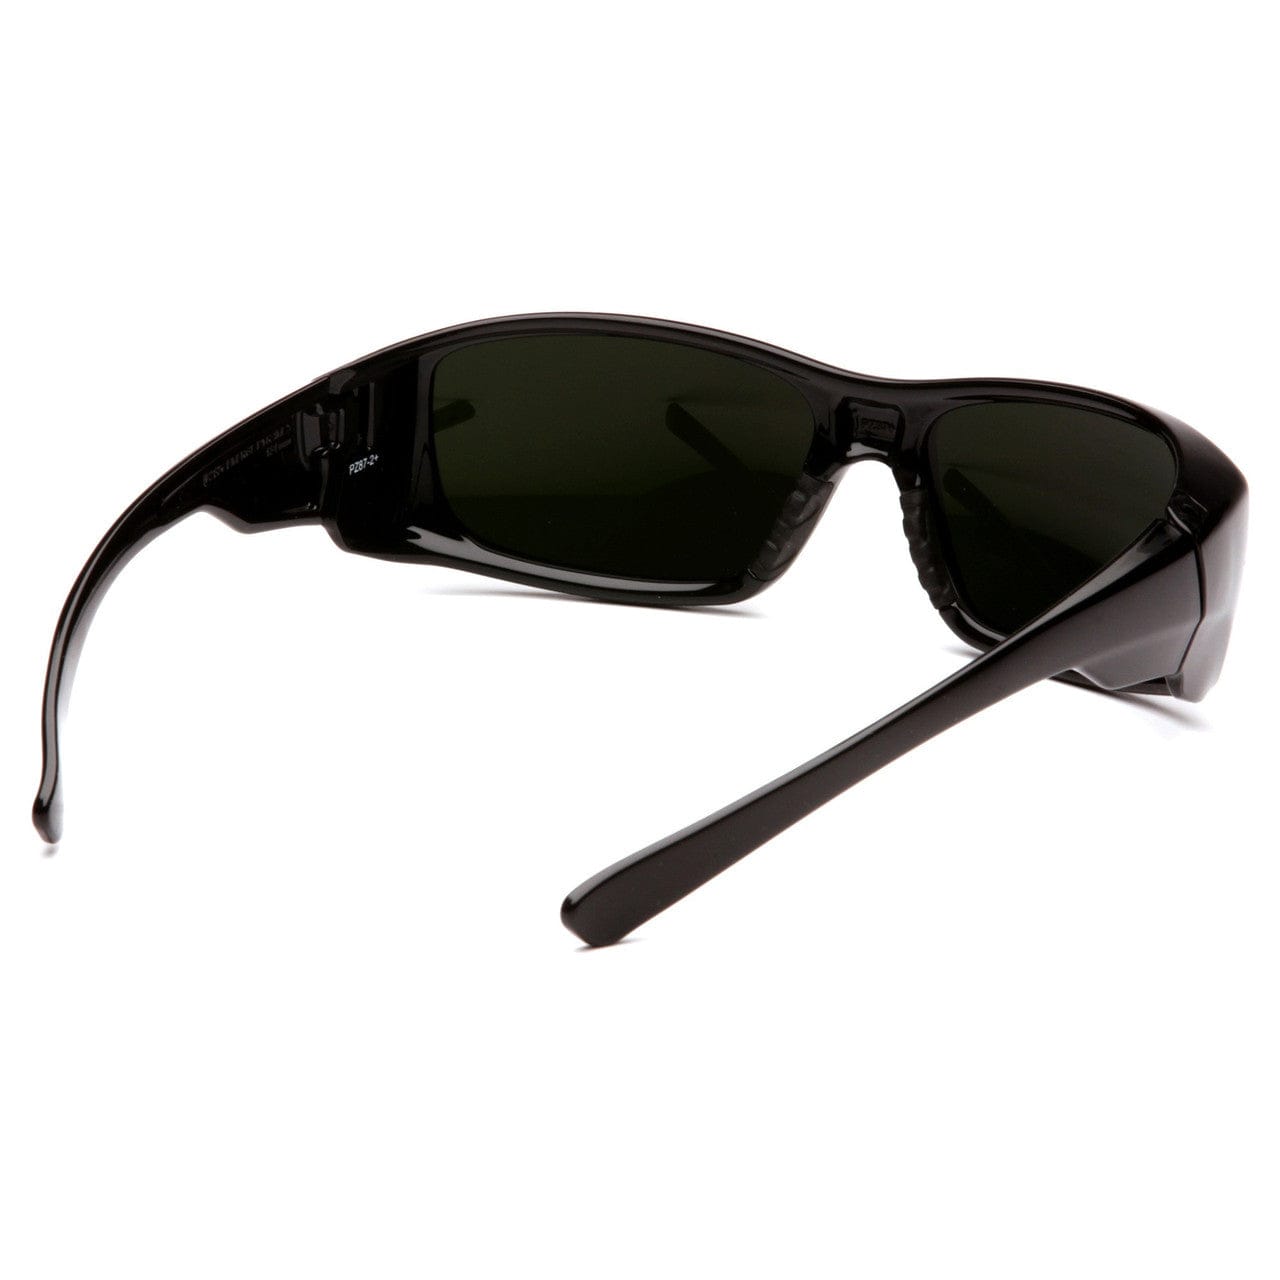 Pyramex Emerge Safety Glasses Black Frame IR Shade 5.0 Lens SB7950SF Back